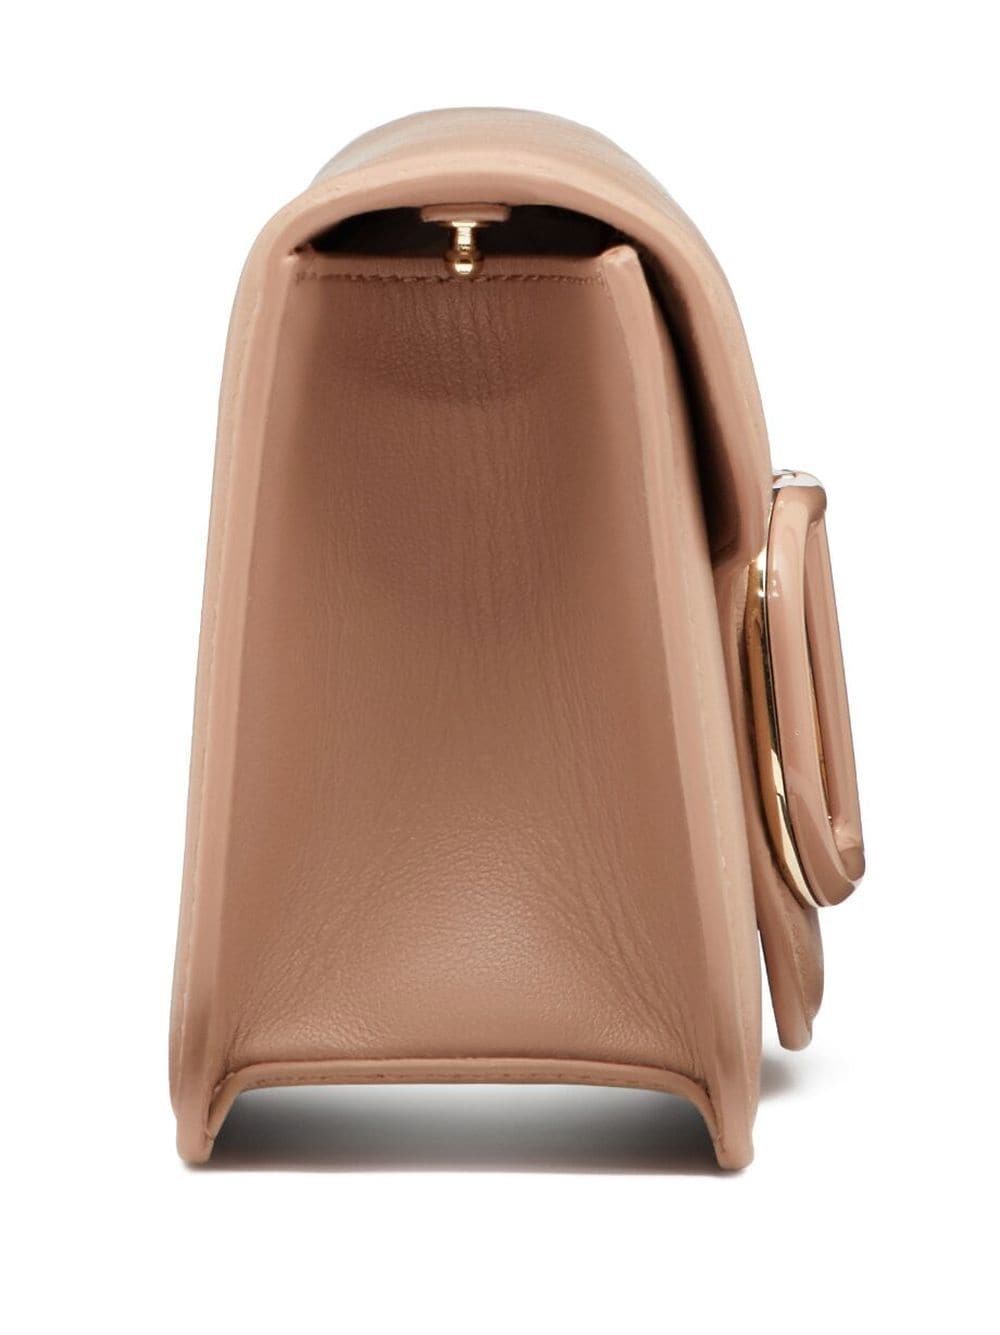 VALENTINO GARAVANI: Locò bag in smooth leather - Pink  Valentino Garavani shoulder  bag 2W0B0K30IYS online at